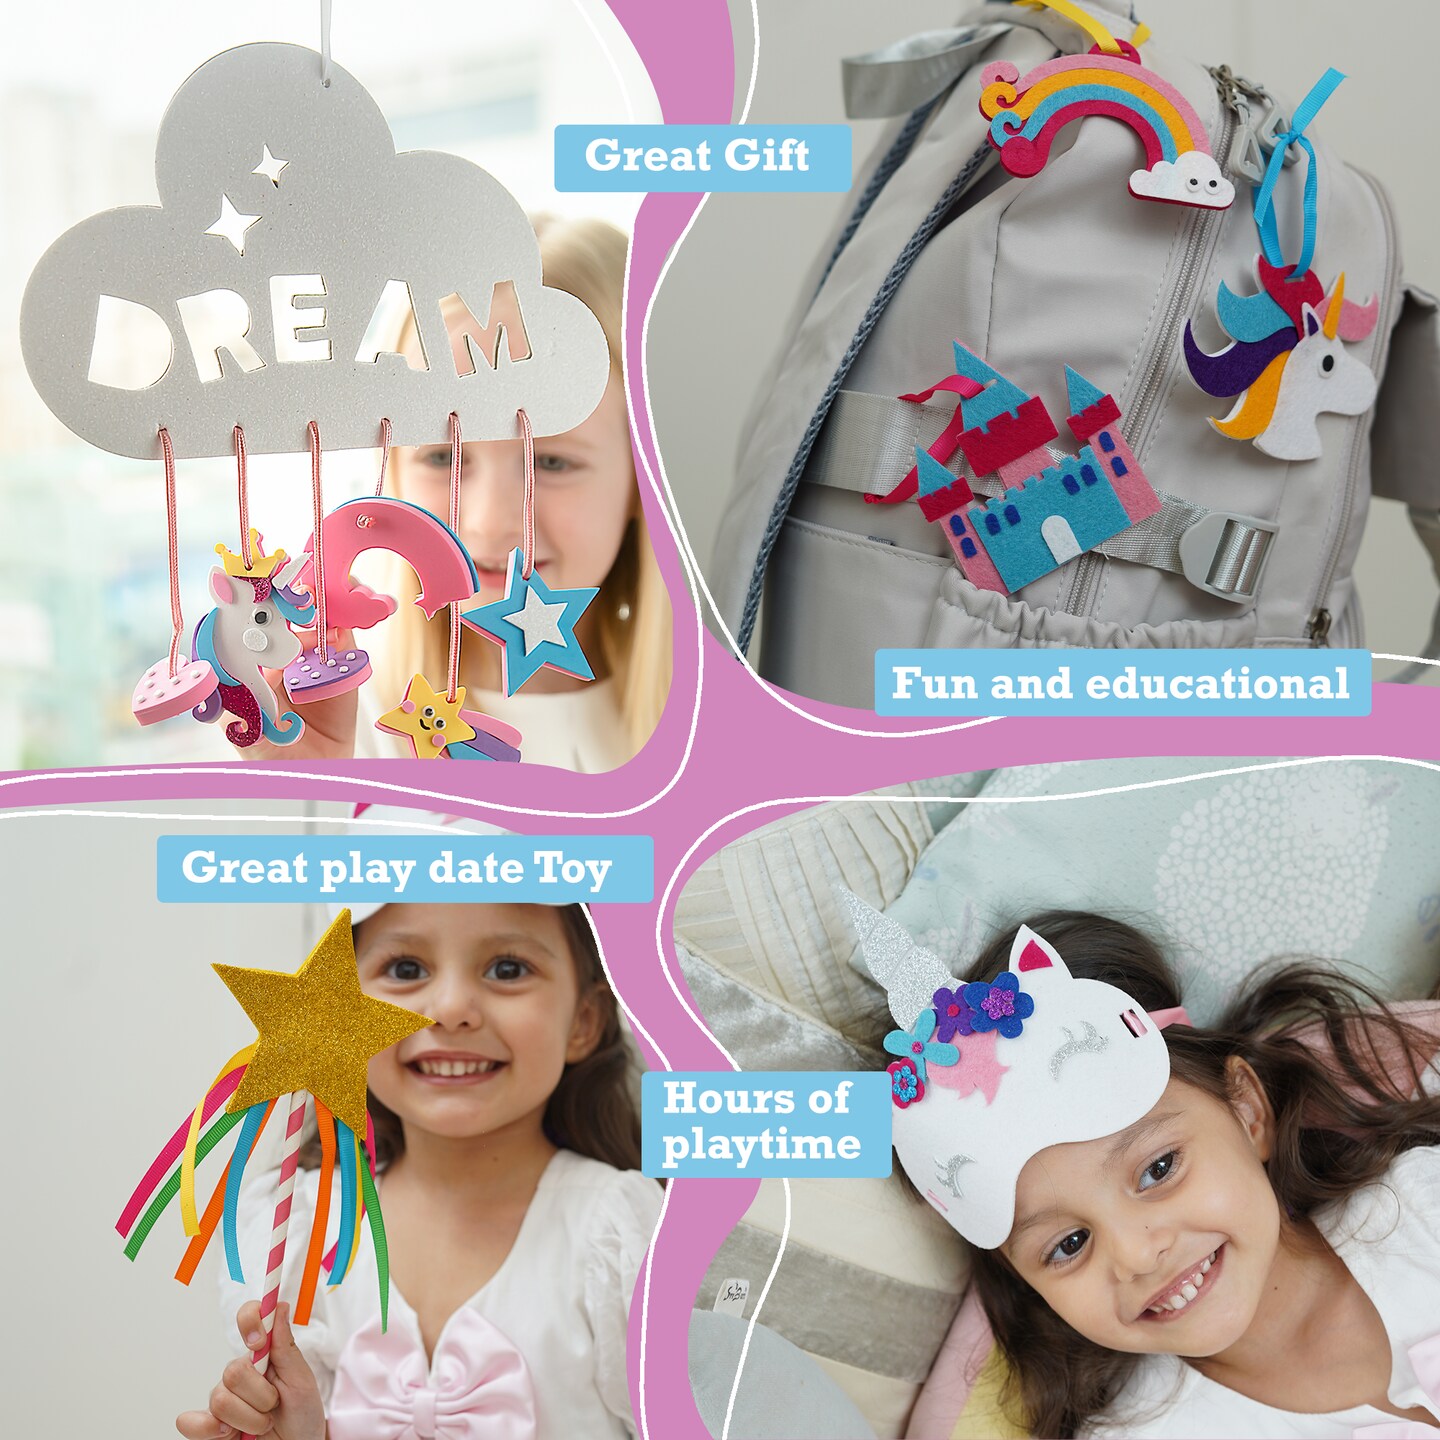 Unicorn Craft Pack, Unicorn Activity Pack, Gifts for Girls, Unicorn  Activity Box ,unicorn Crafts, Girls Unicorn Crafts, 4 5 6 7 8 Year Old 